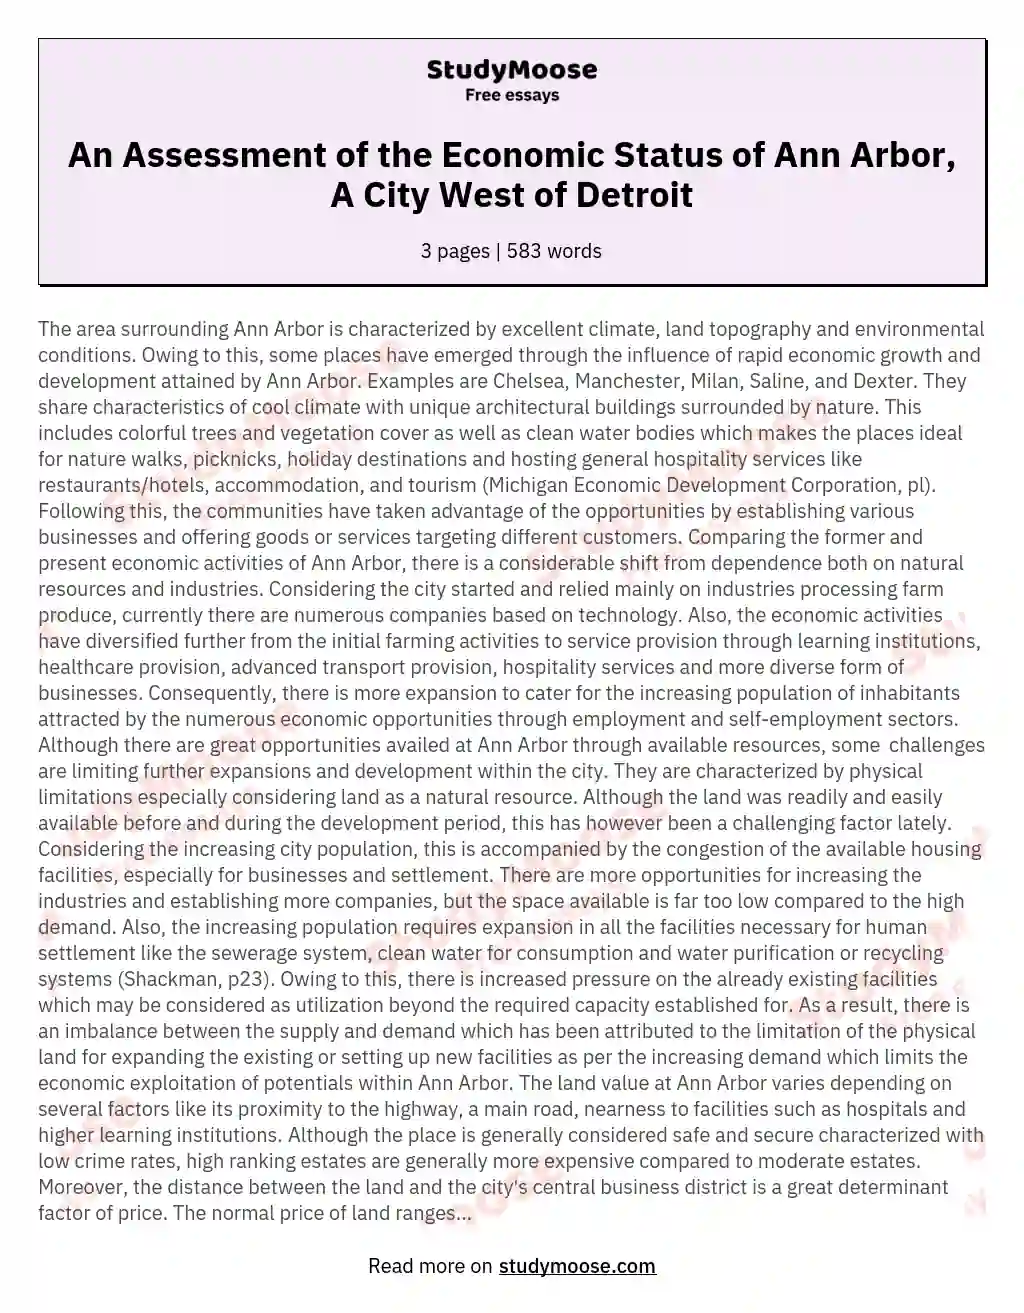 An Assessment of the Economic Status of Ann Arbor, A City West of Detroit essay